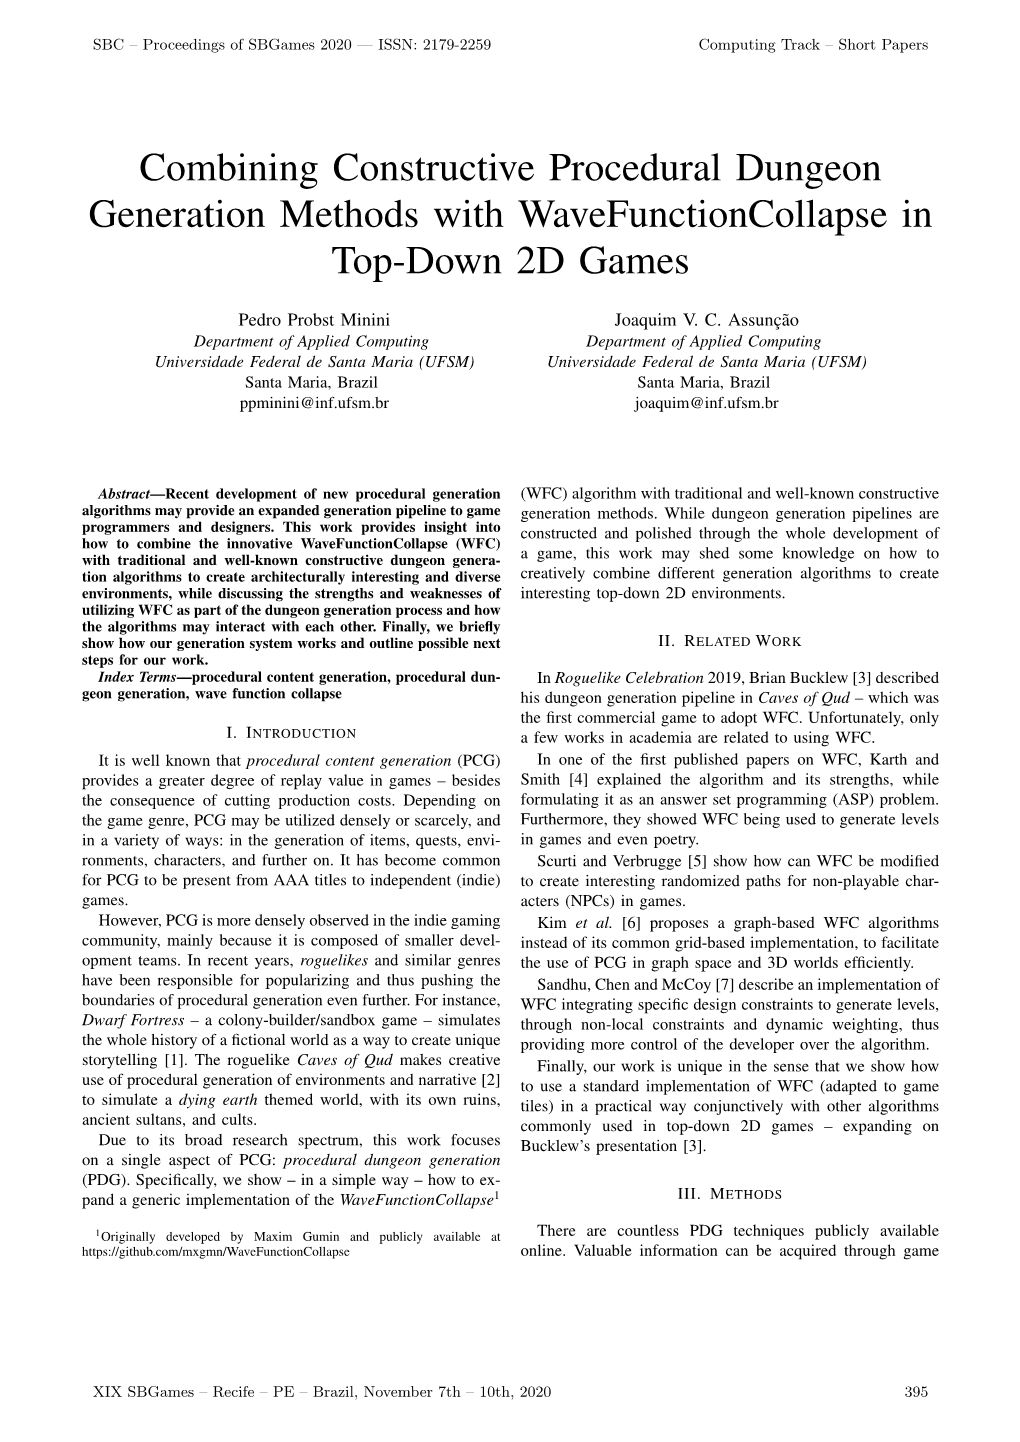 Combining Constructive Procedural Dungeon Generation Methods with Wavefunctioncollapse in Top-Down 2D Games